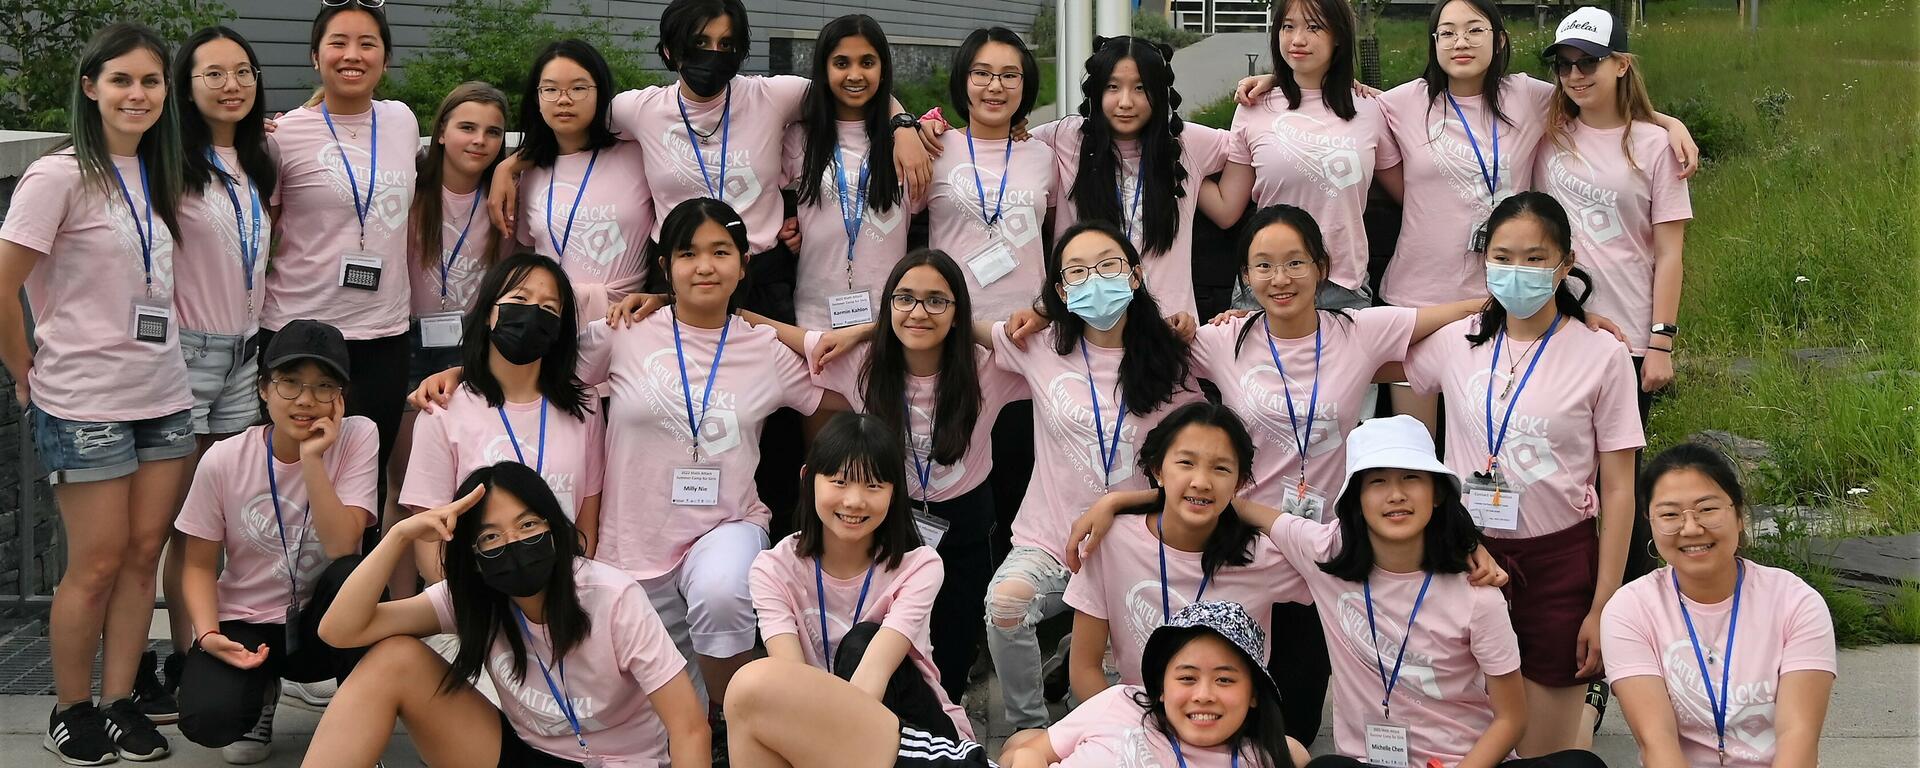 a group of girls at math camp, wearing pink t-shirts